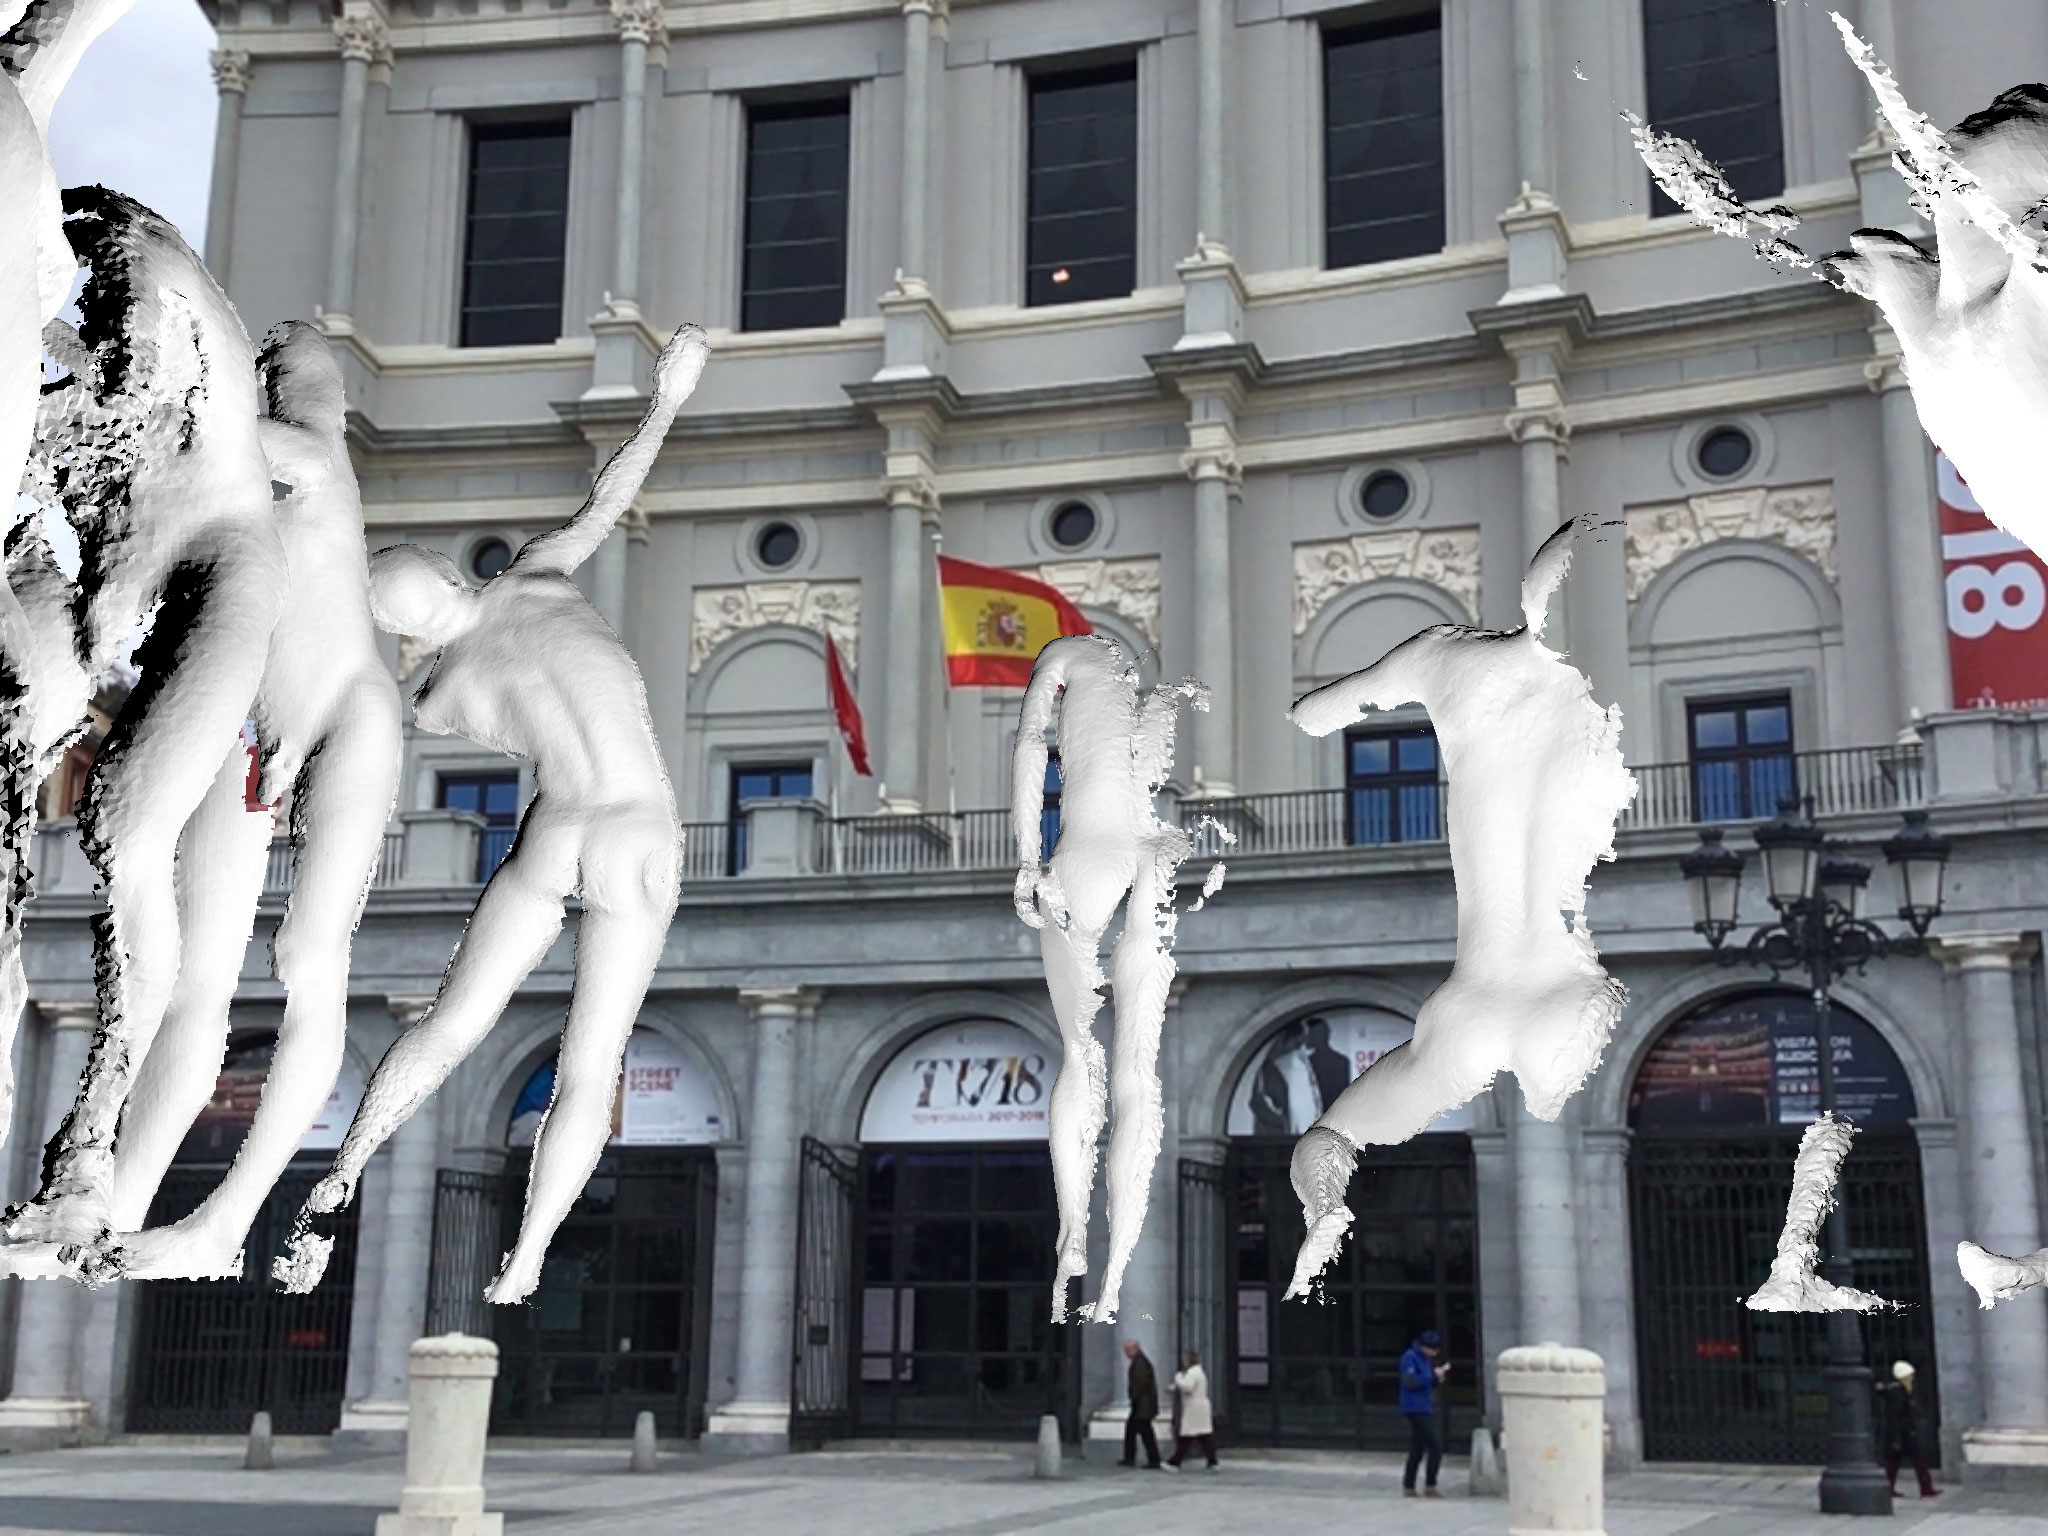 Aran-augmented-reality-art-network-developed-by-nemaniax.com-2018-2018-Plaza-Opera-Madrid